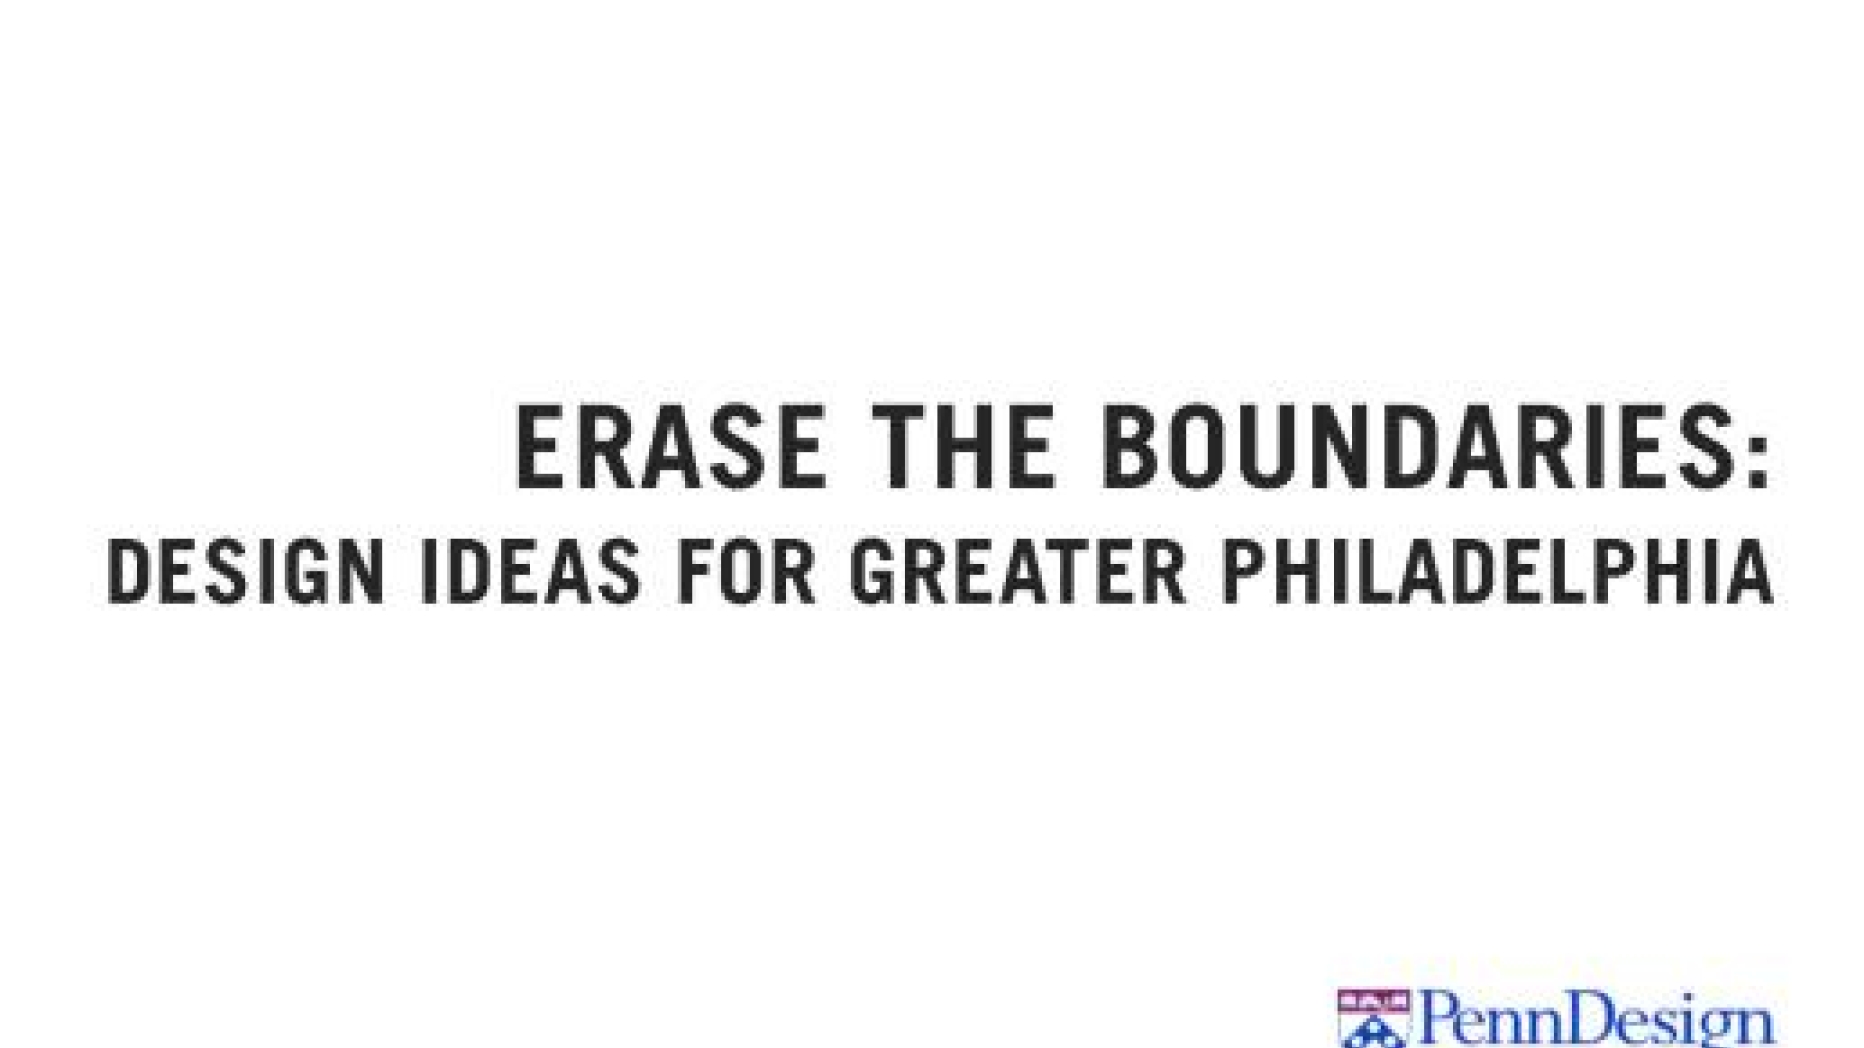 "Erase the Boundaries: Design Ideas for Greater Philadelphia"